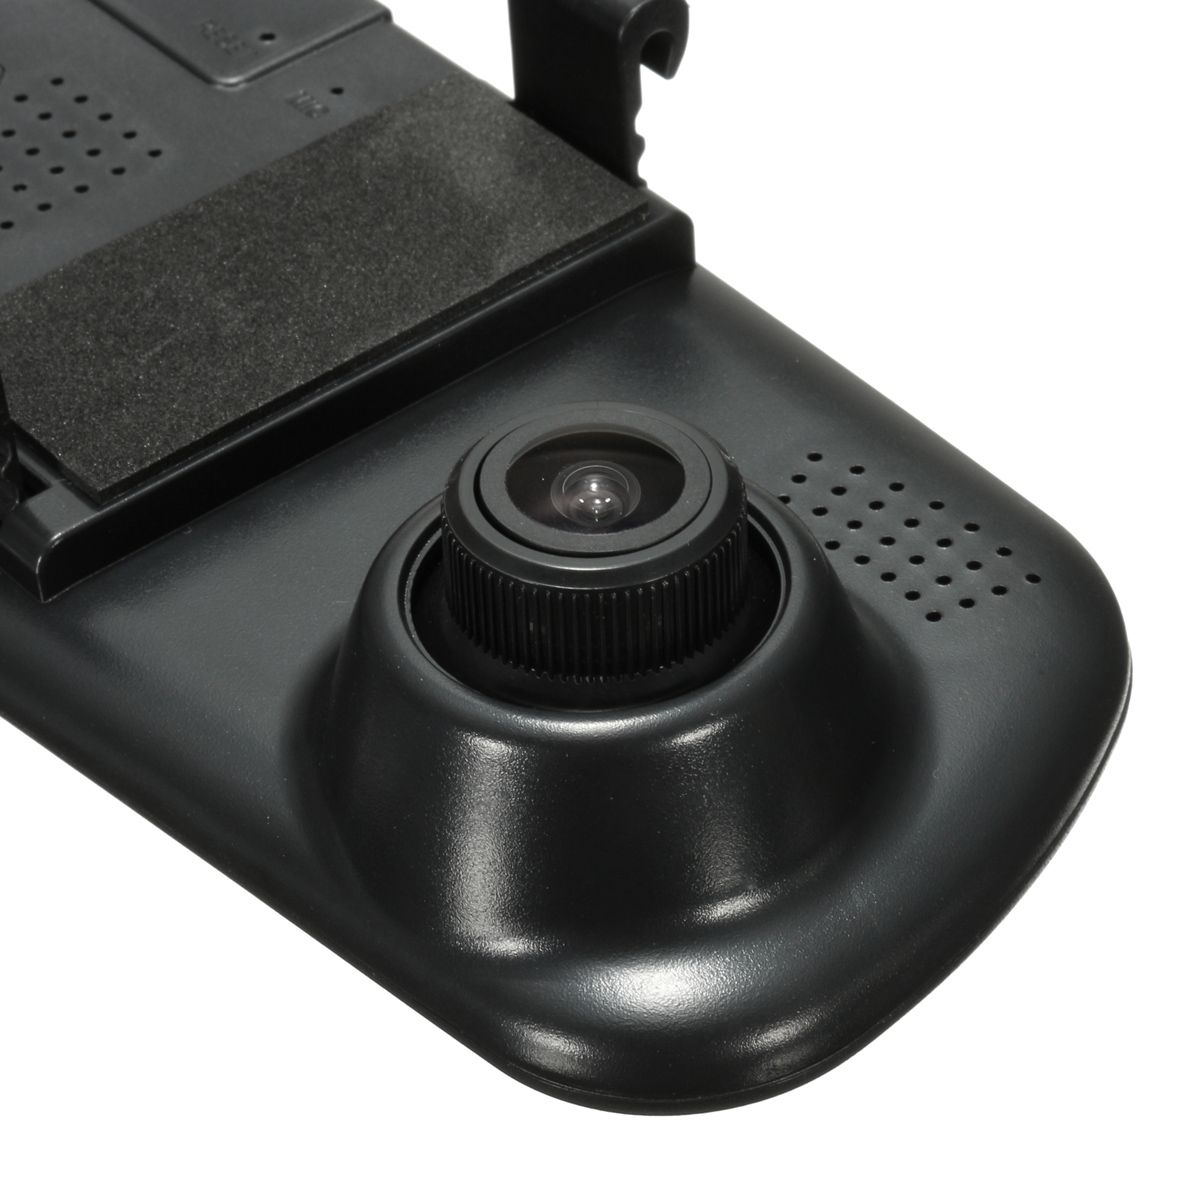 HD-43-Inch-Dual-Lens-Recorder-Mirror-Vehicle-DVR-Dash-Cam-Car-Rear-View-Camera-1371896